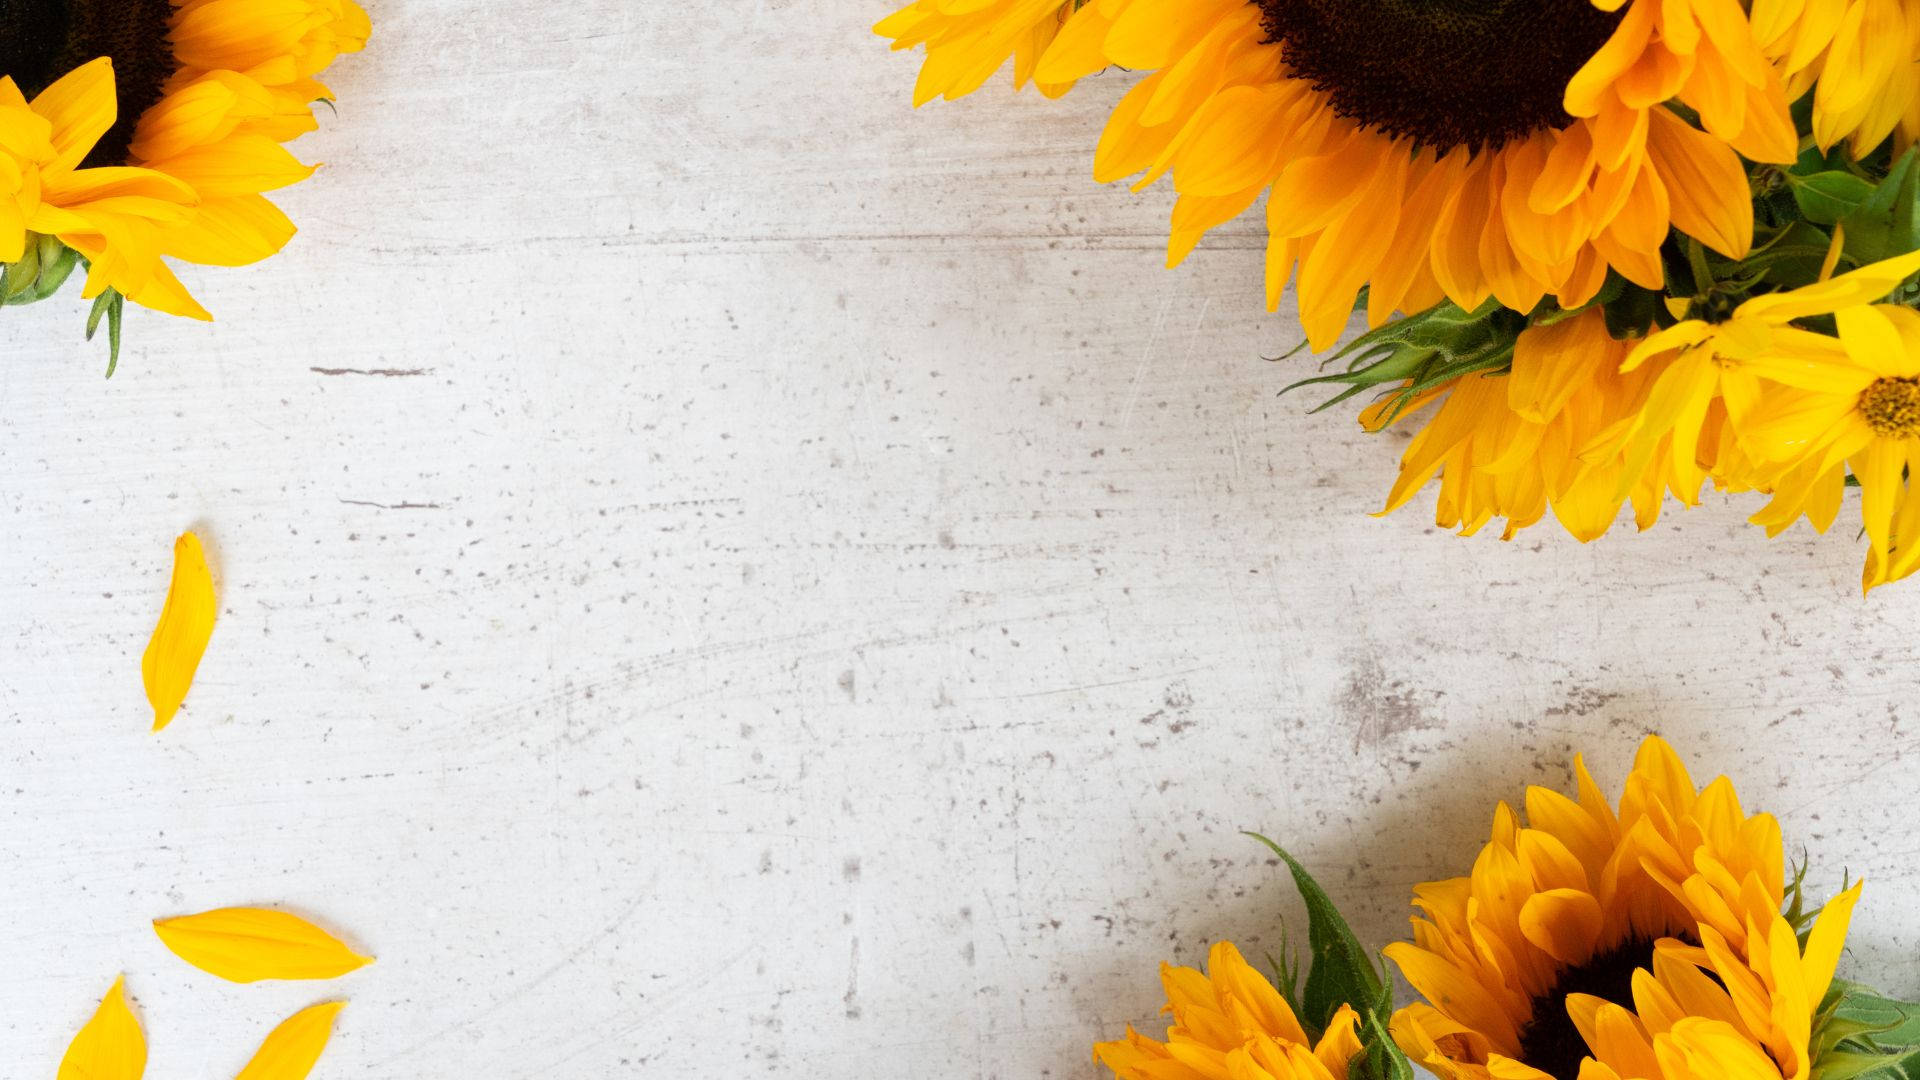 Feel the brightness of life with this sunflower desktop wallpaper. Wallpaper